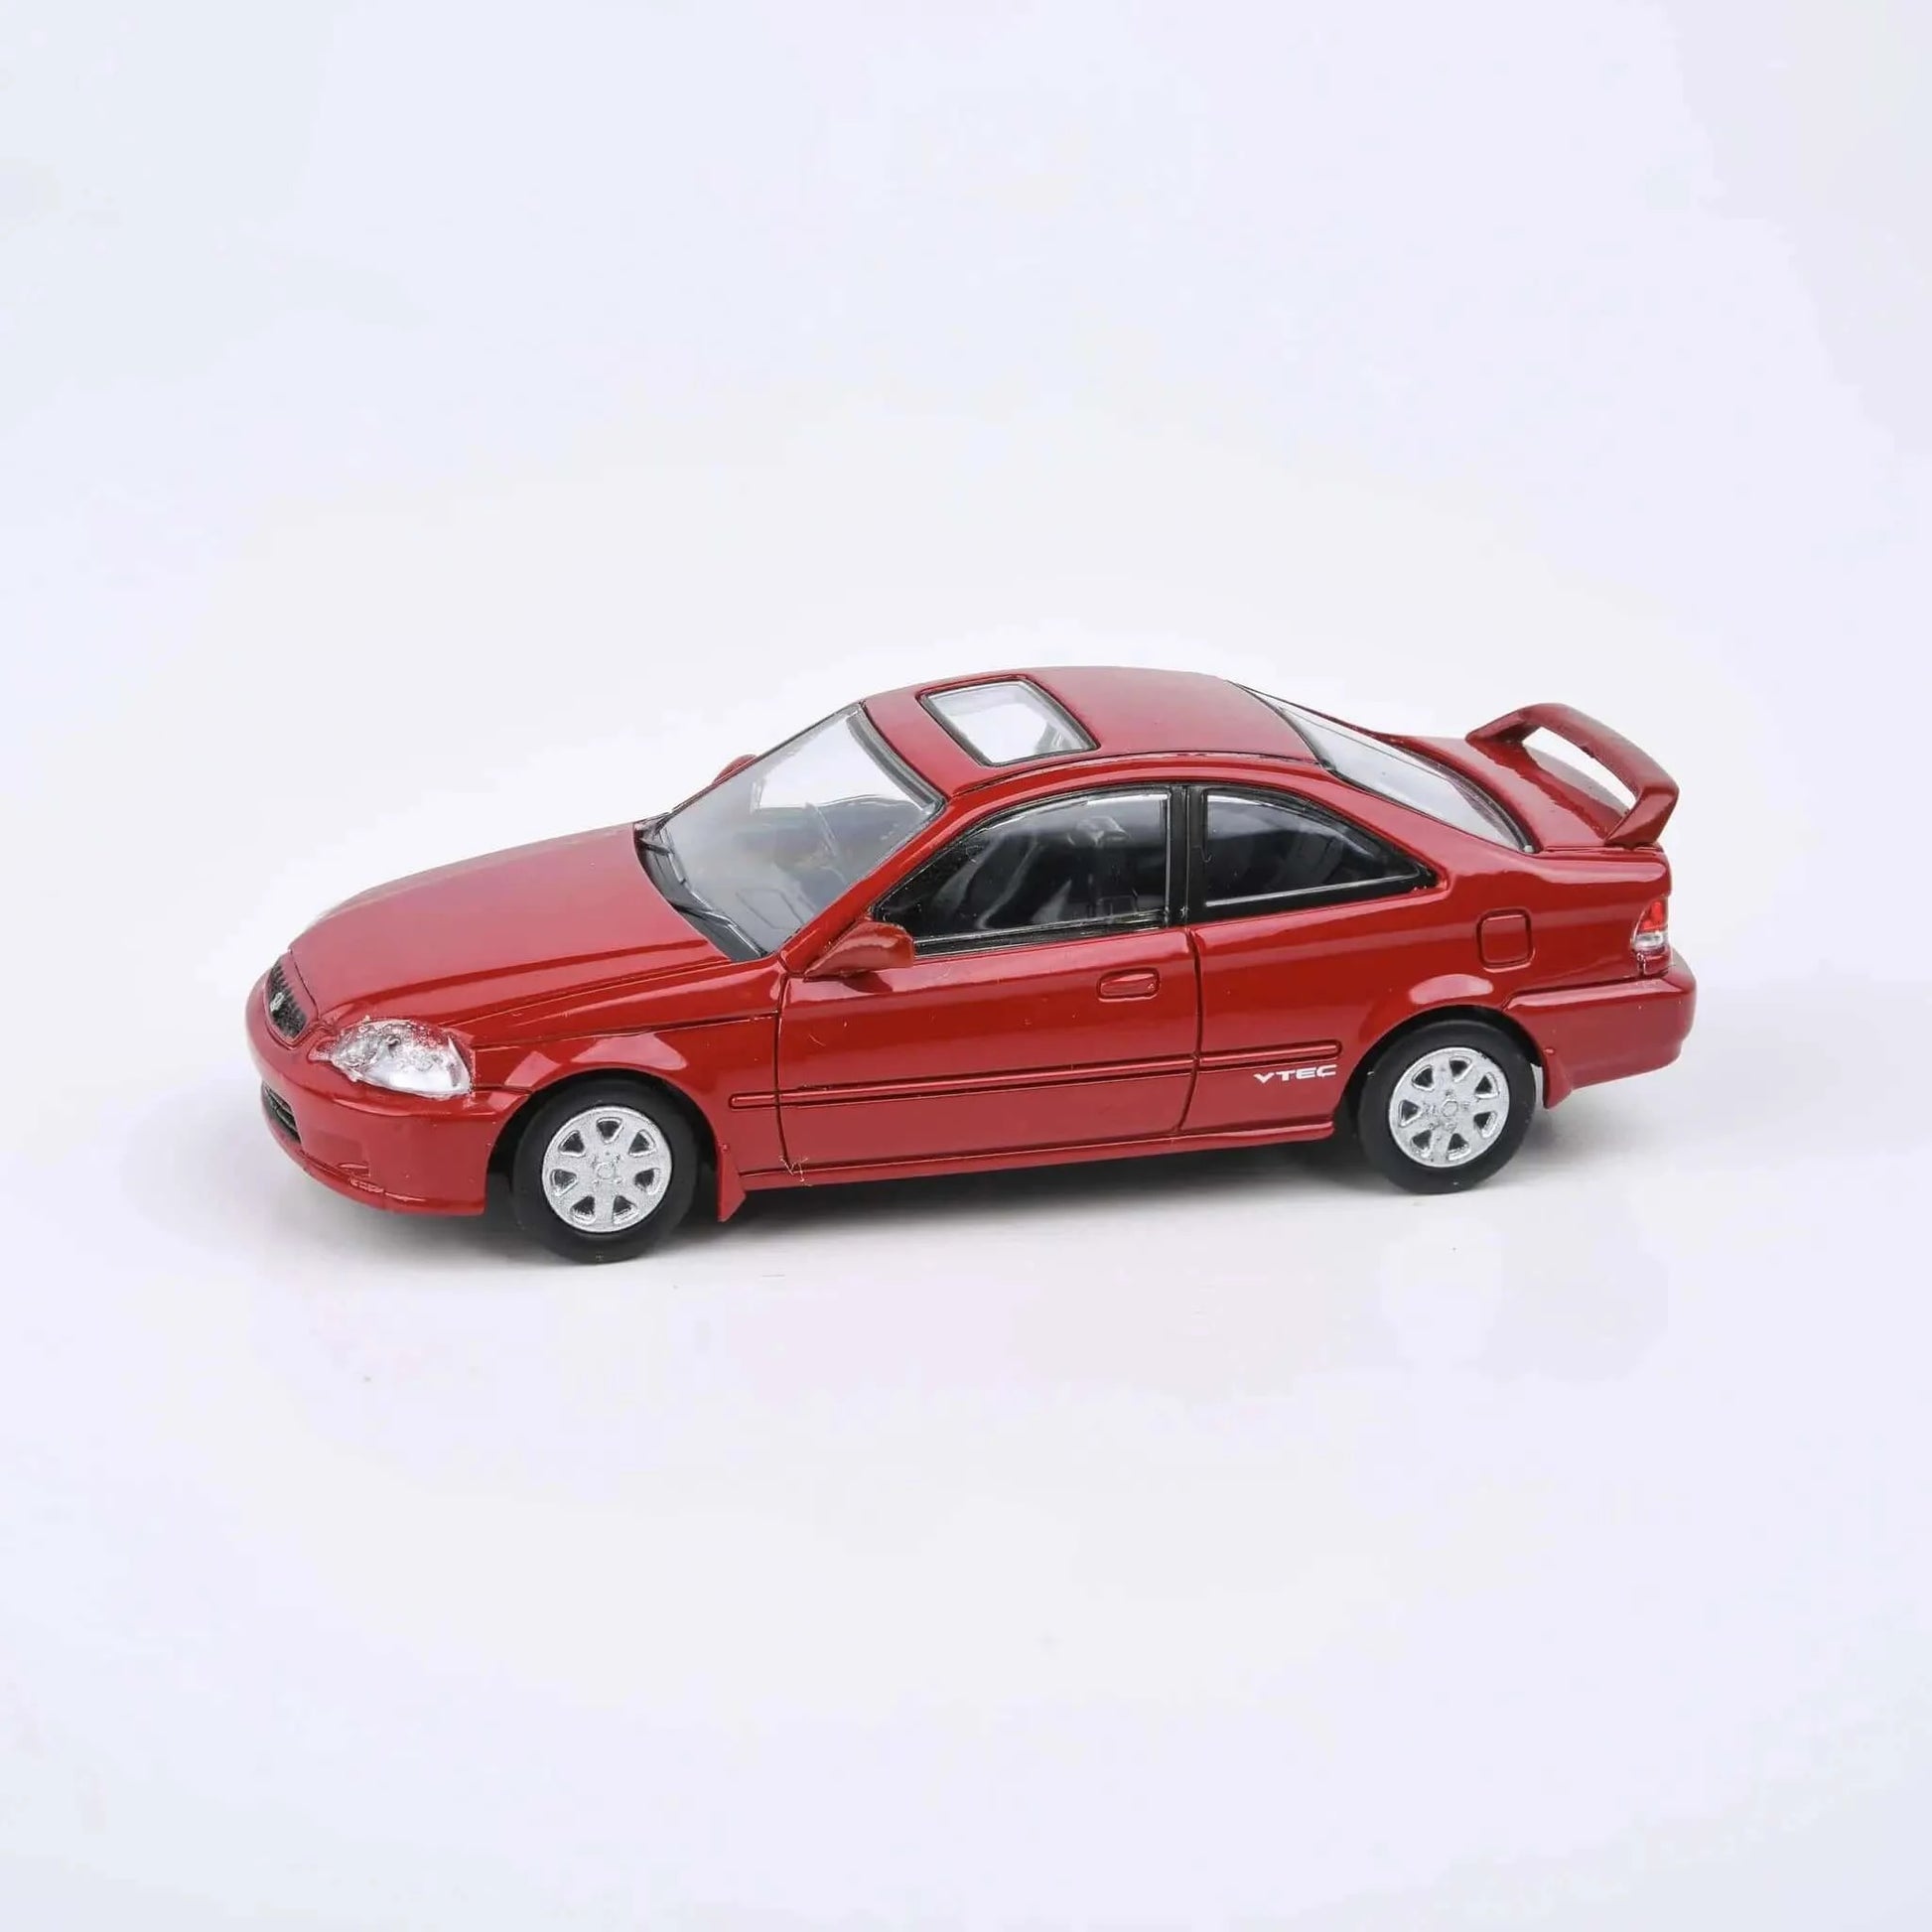 Honda civic Si EM1 1999 red LHD Para64 1/64 | Motors Miniatures